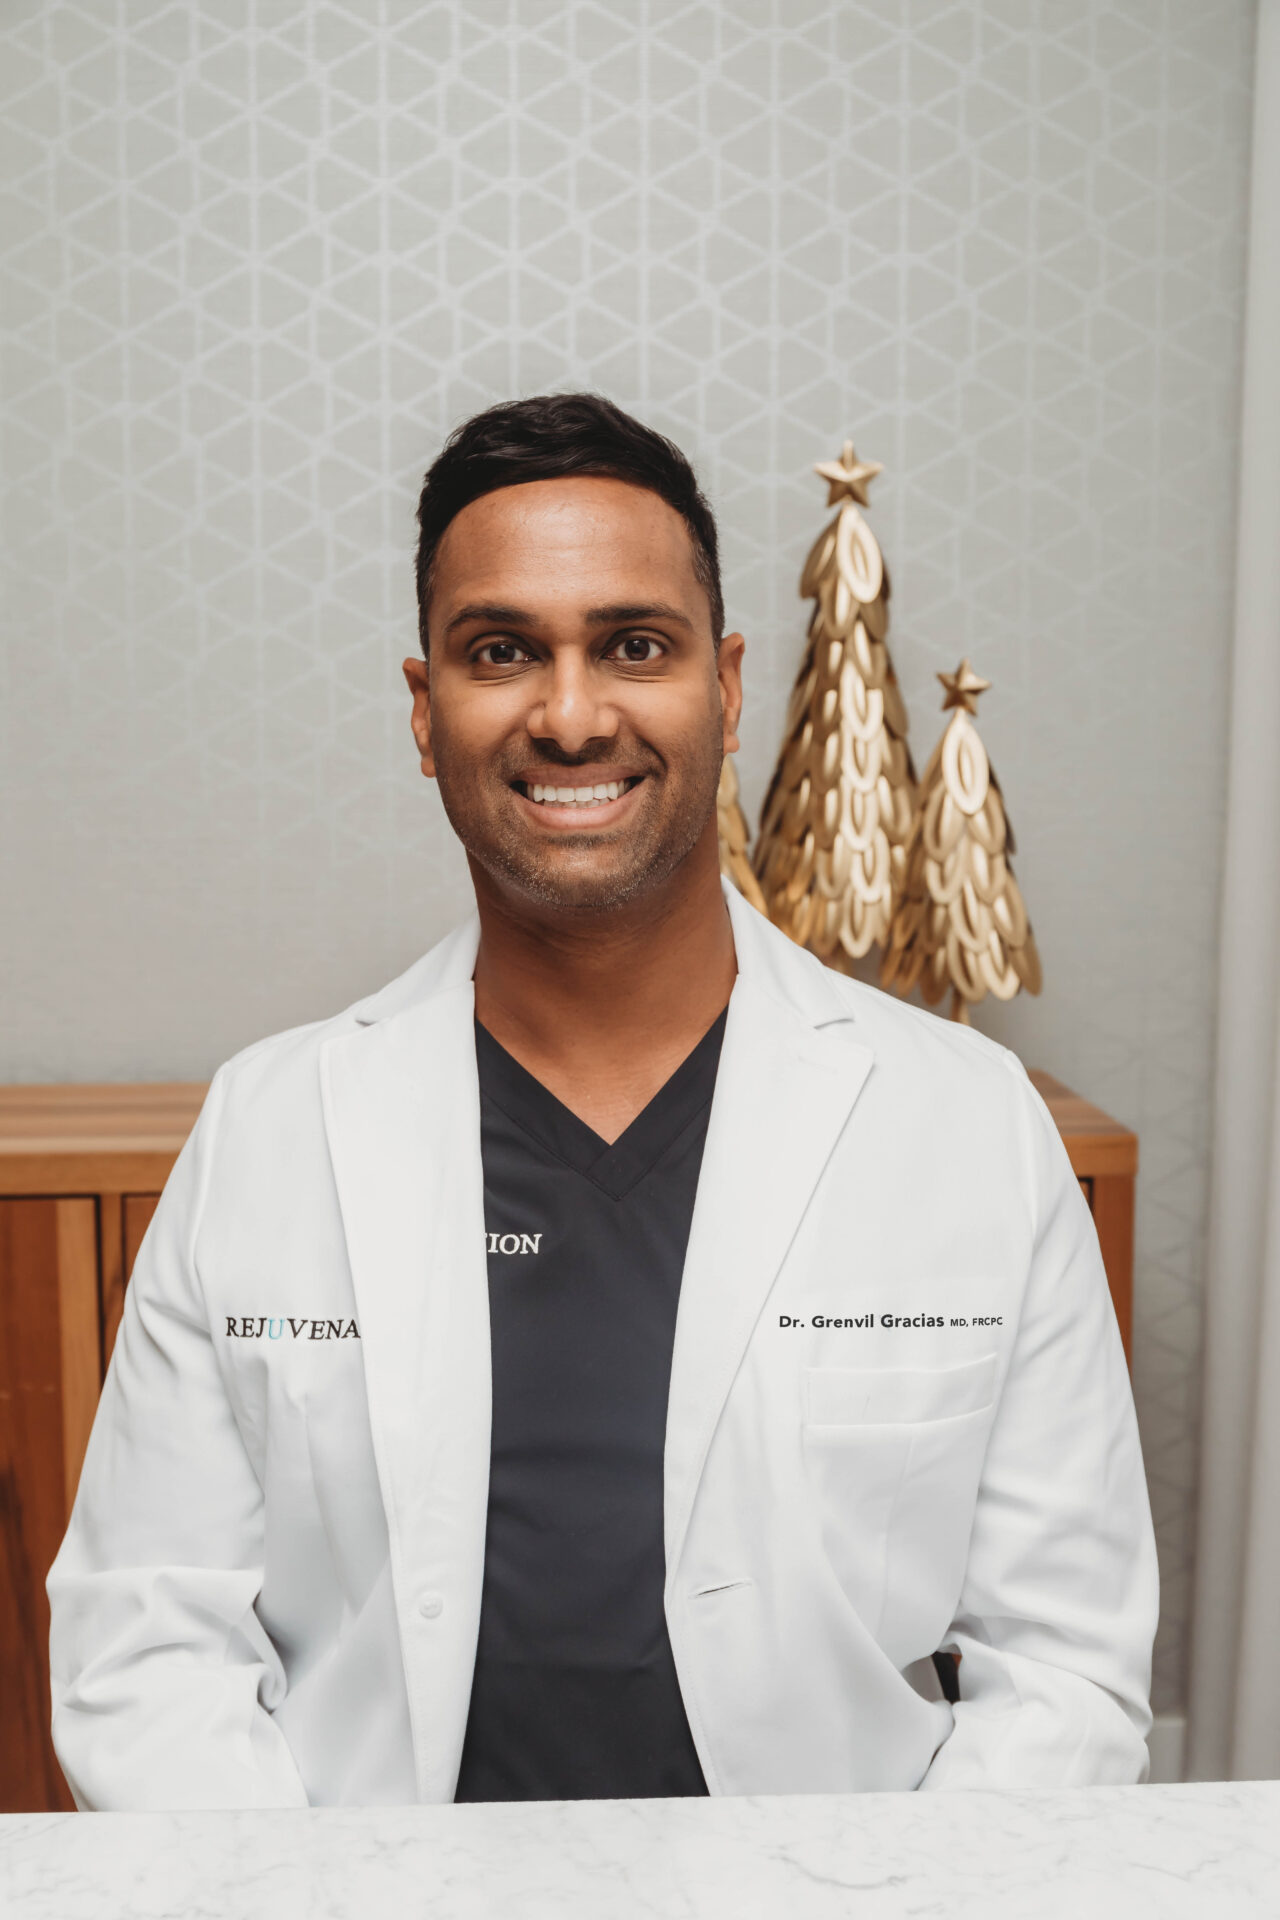 Dr. Gracias in a lab coat, smiling.